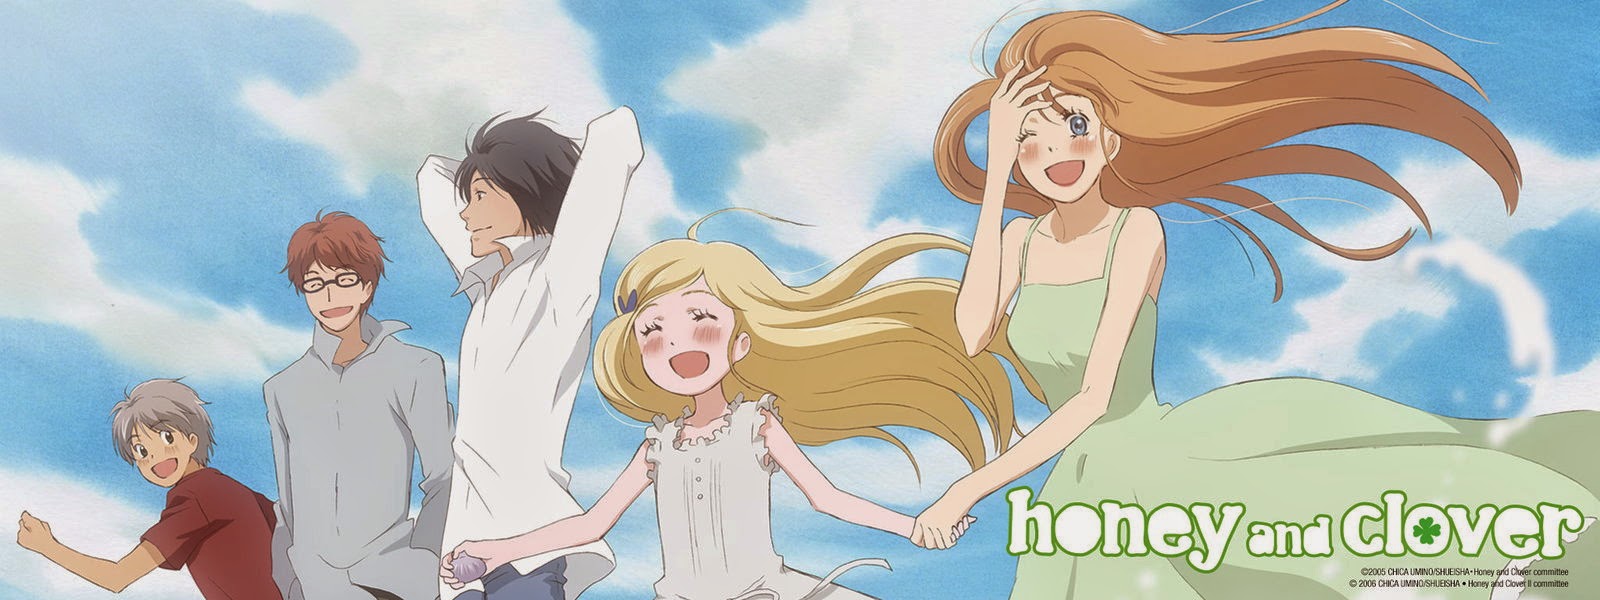 Laniify Anime And Manga Fangirl For Life Review Honey And Clover I Ii